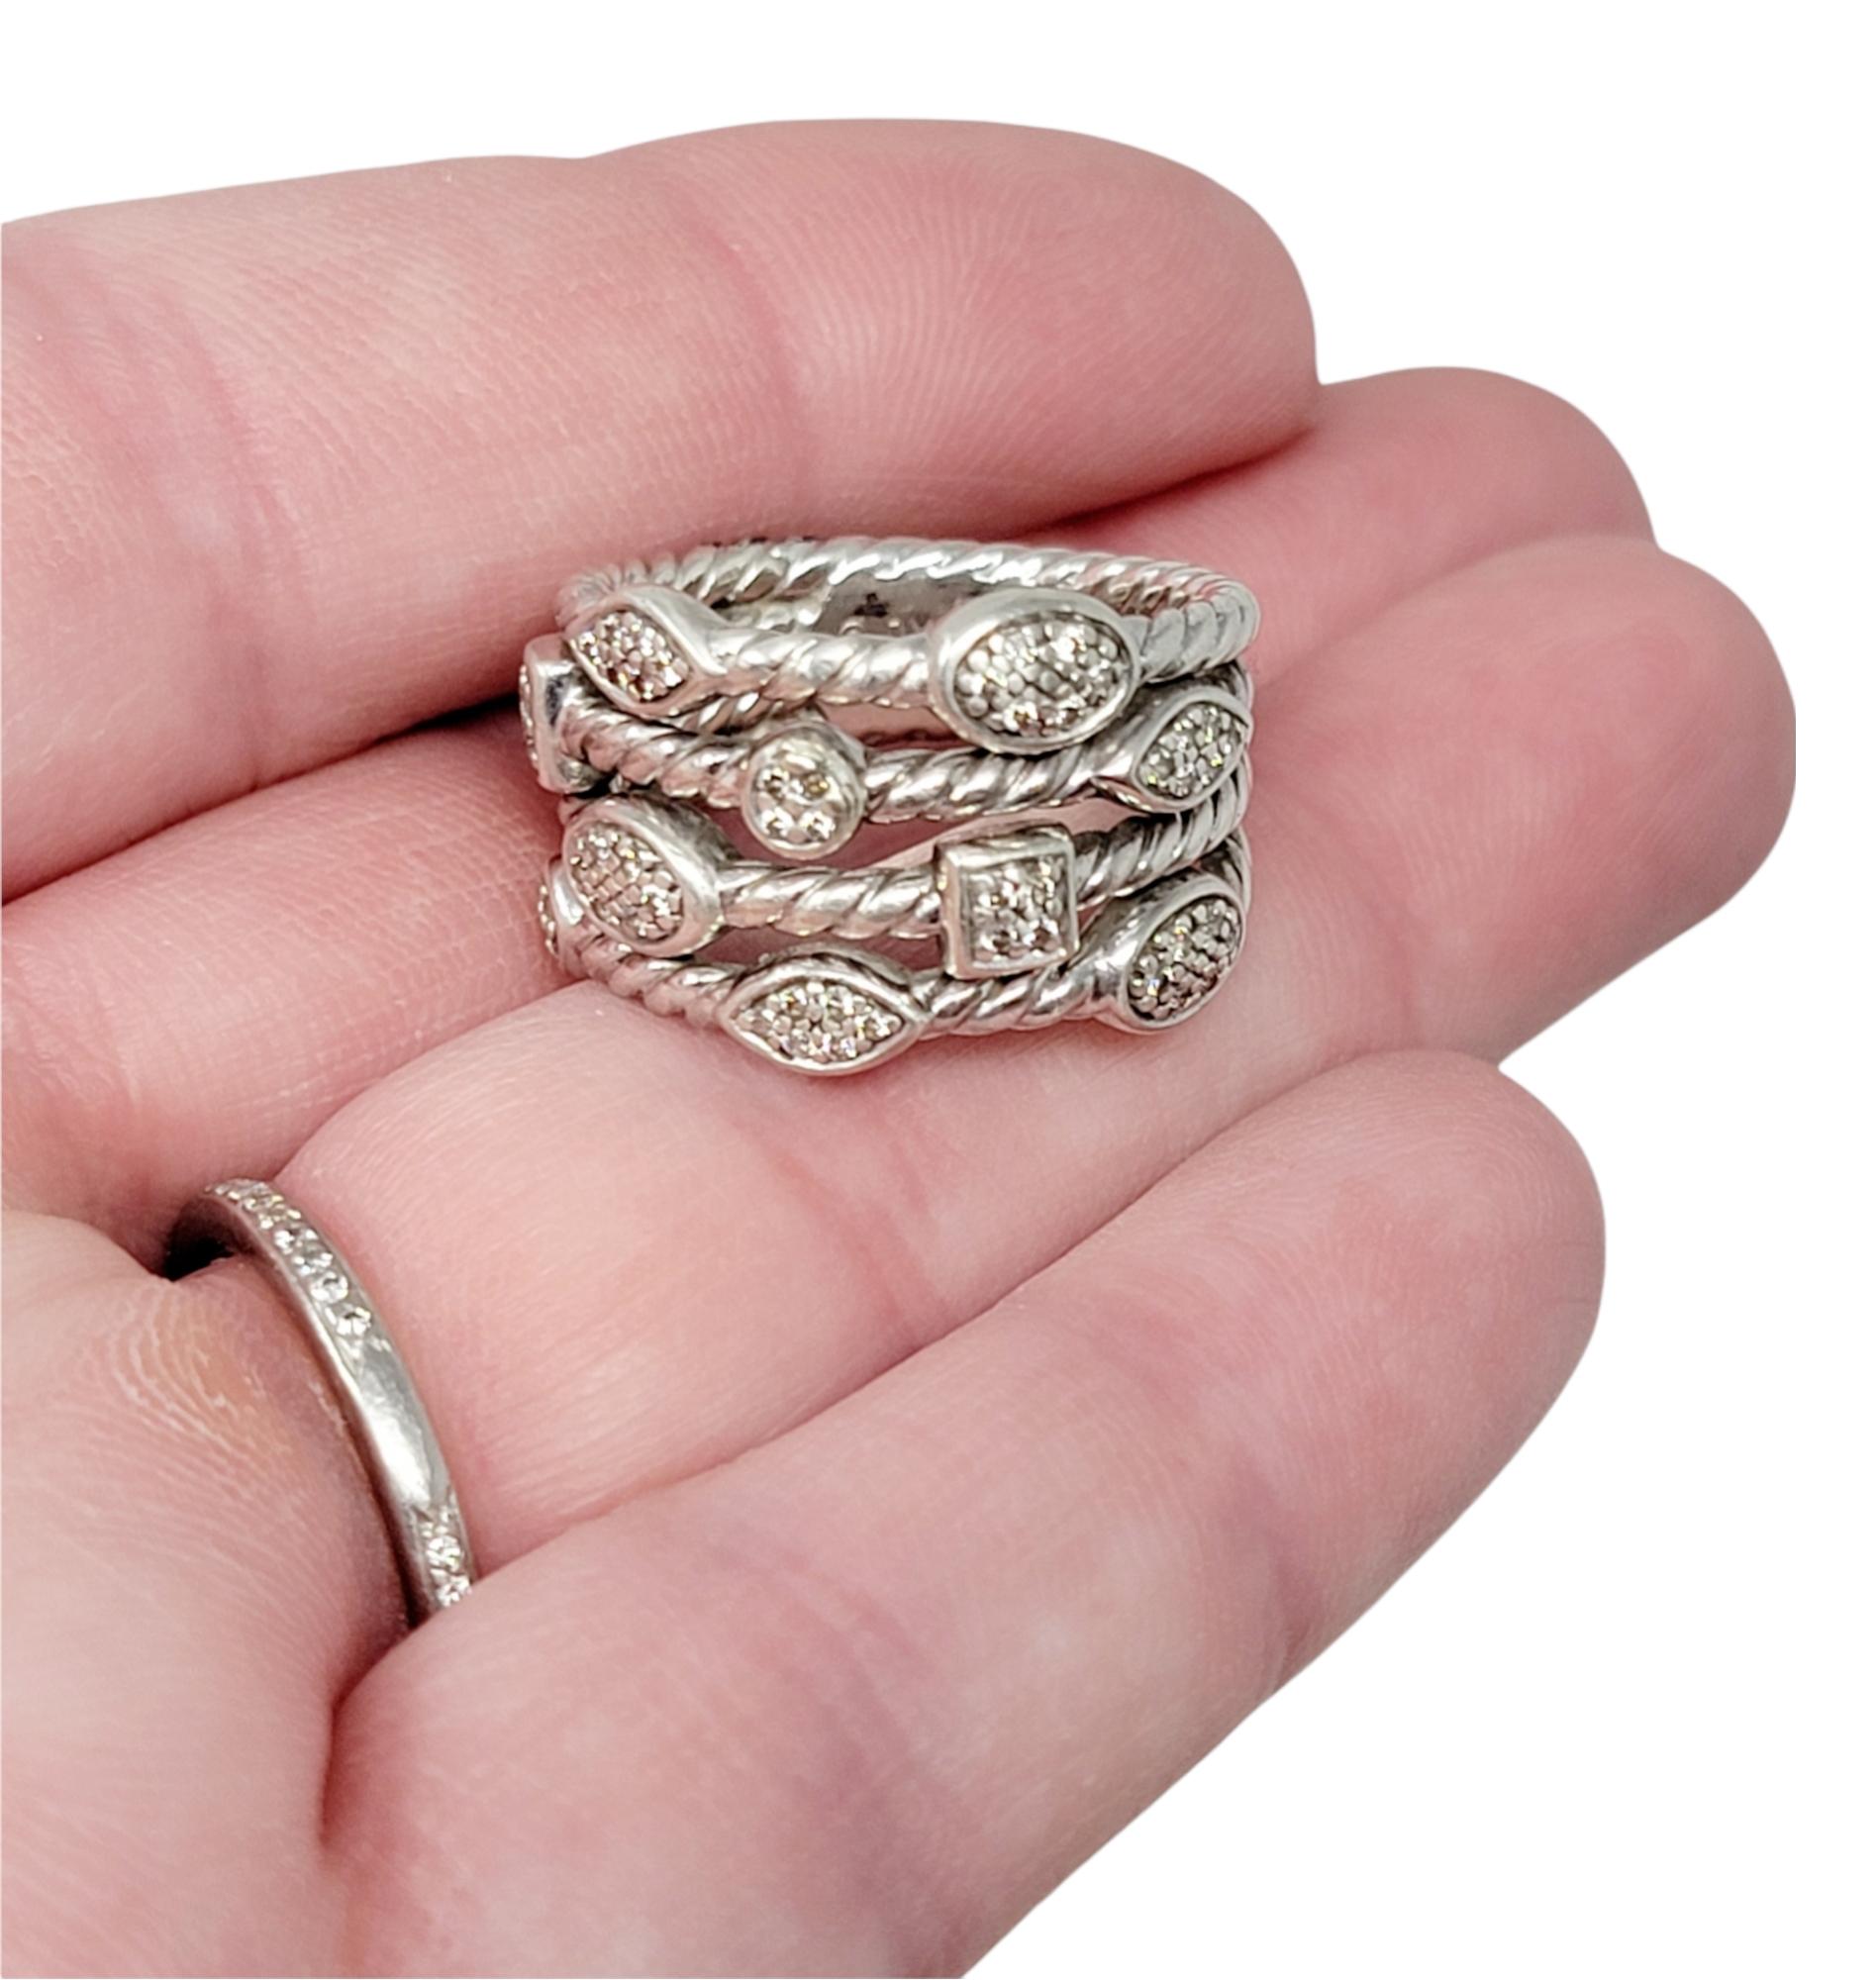 David Yurman Pave Diamond Confetti 4 Row Cable Ring in Sterling Silver 2